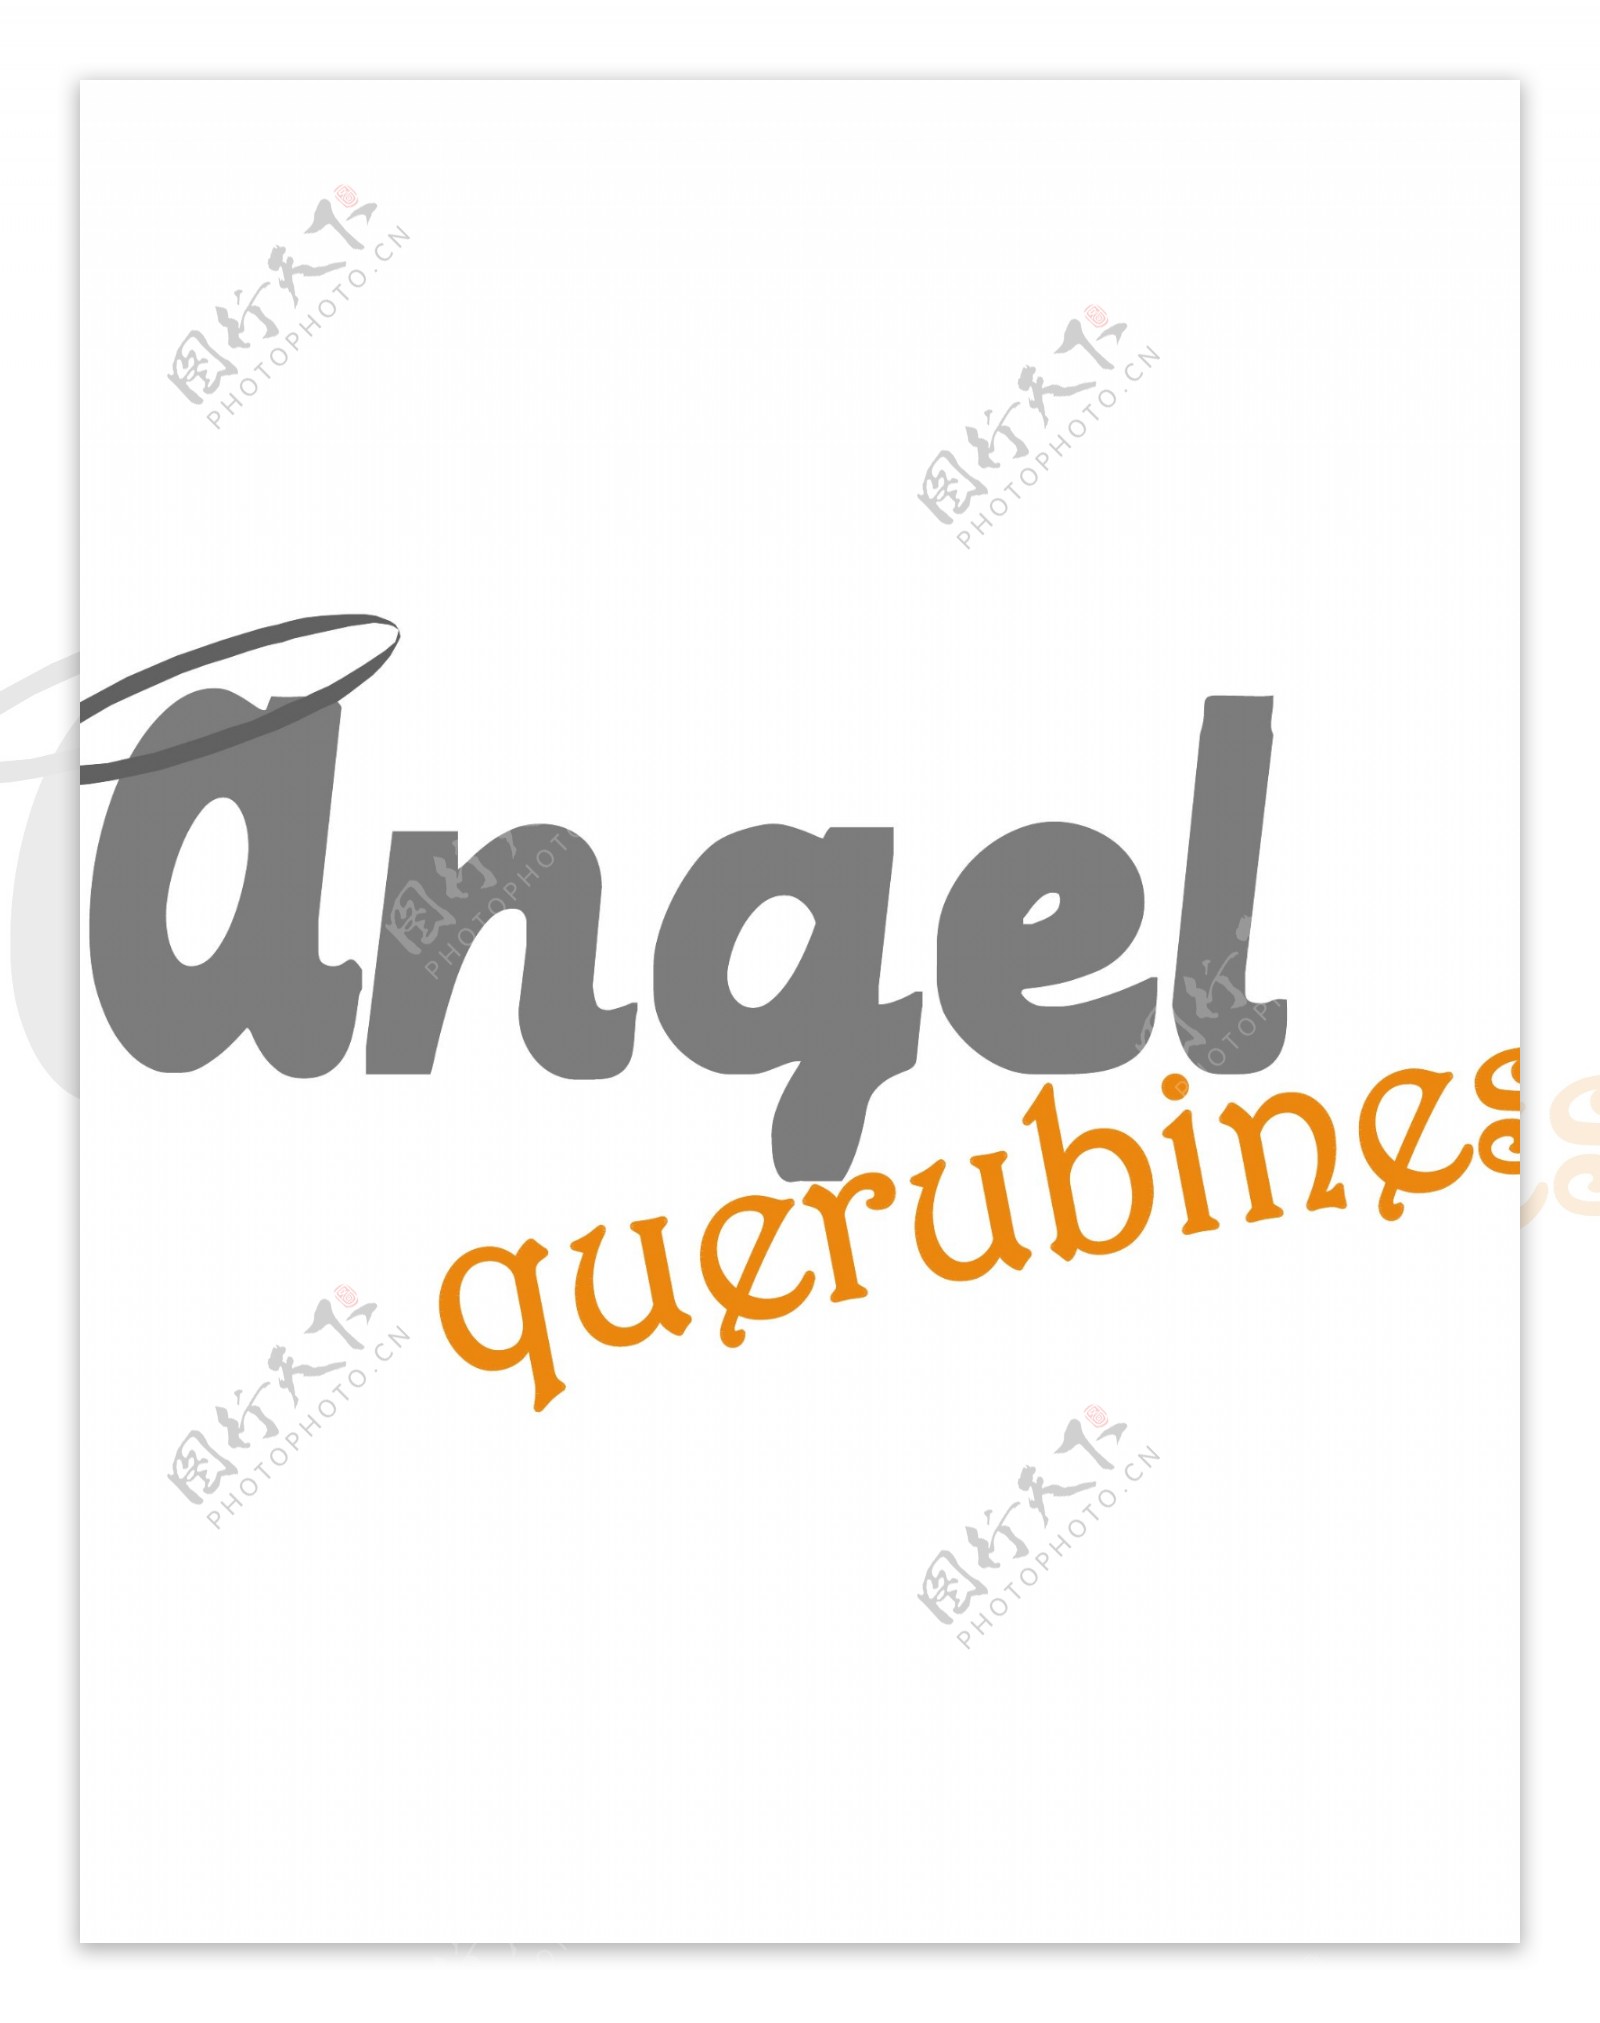 AngelQuerubineslogo设计欣赏AngelQuerubines服装品牌标志下载标志设计欣赏